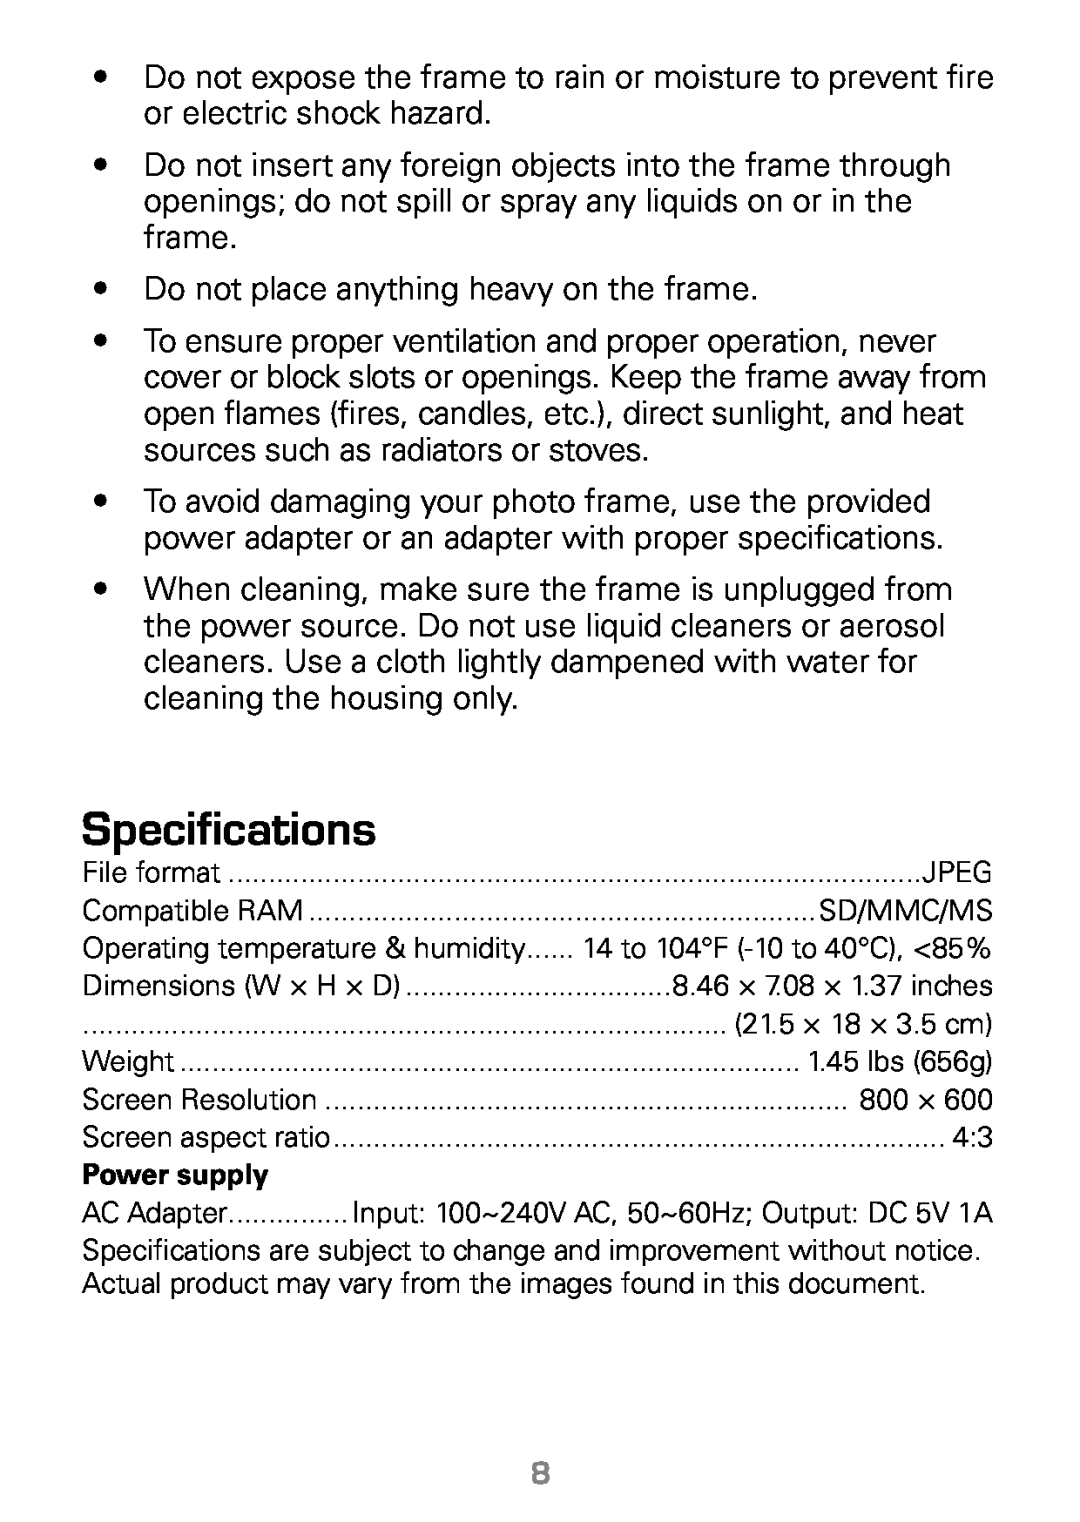 Radio Shack 16-1003 manual Specifications 